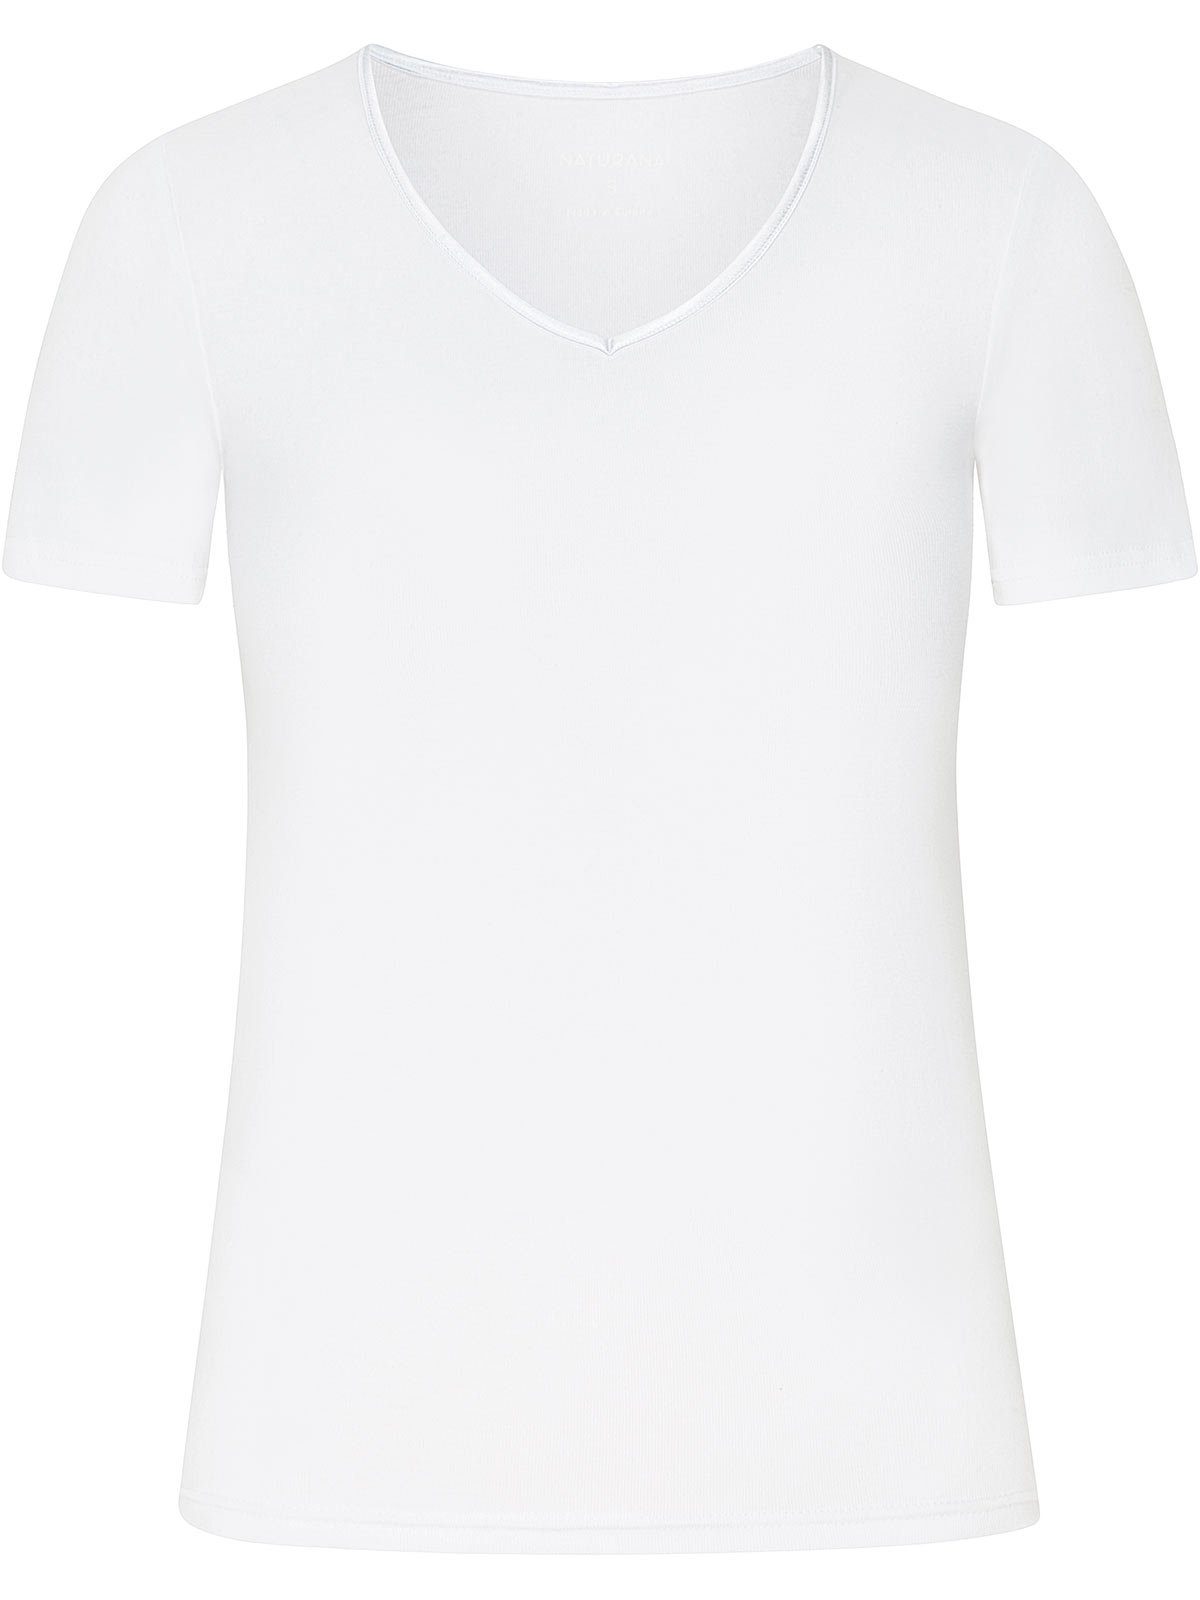 Wäsche/Bademode Unterhemden Naturana Unterziehshirt Damen Shirt Essentials (1 Stück), nachhaltig